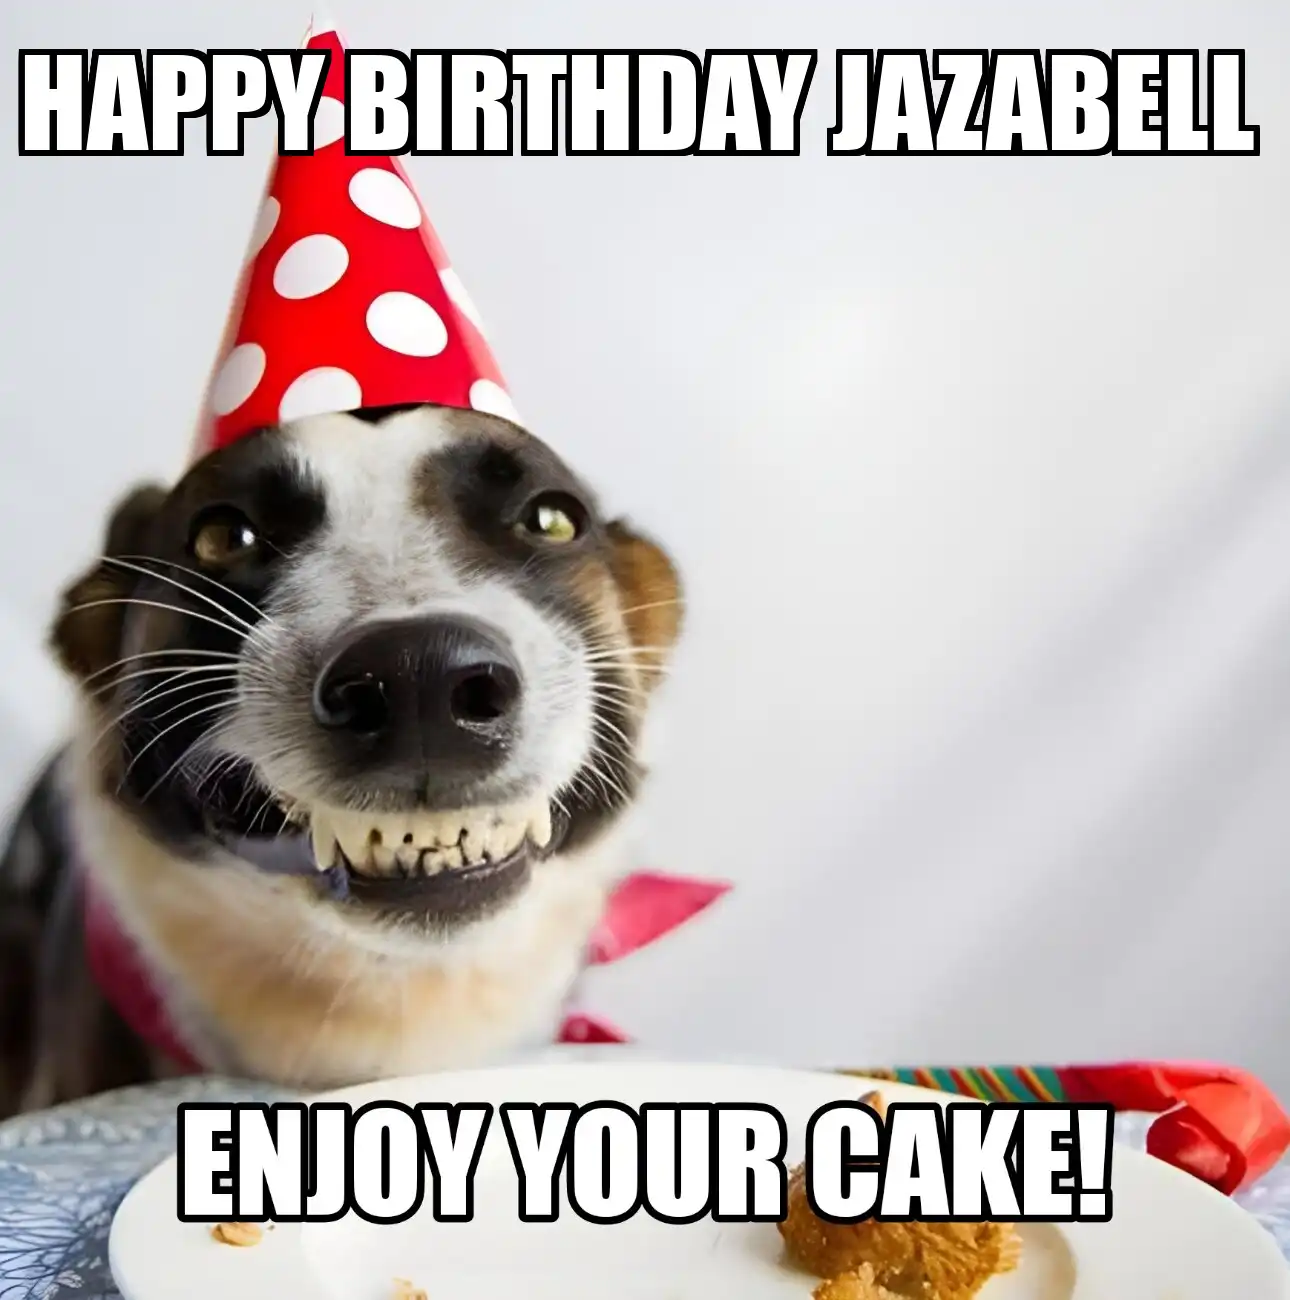 Happy Birthday Jazabell Enjoy Your Cake Dog Meme